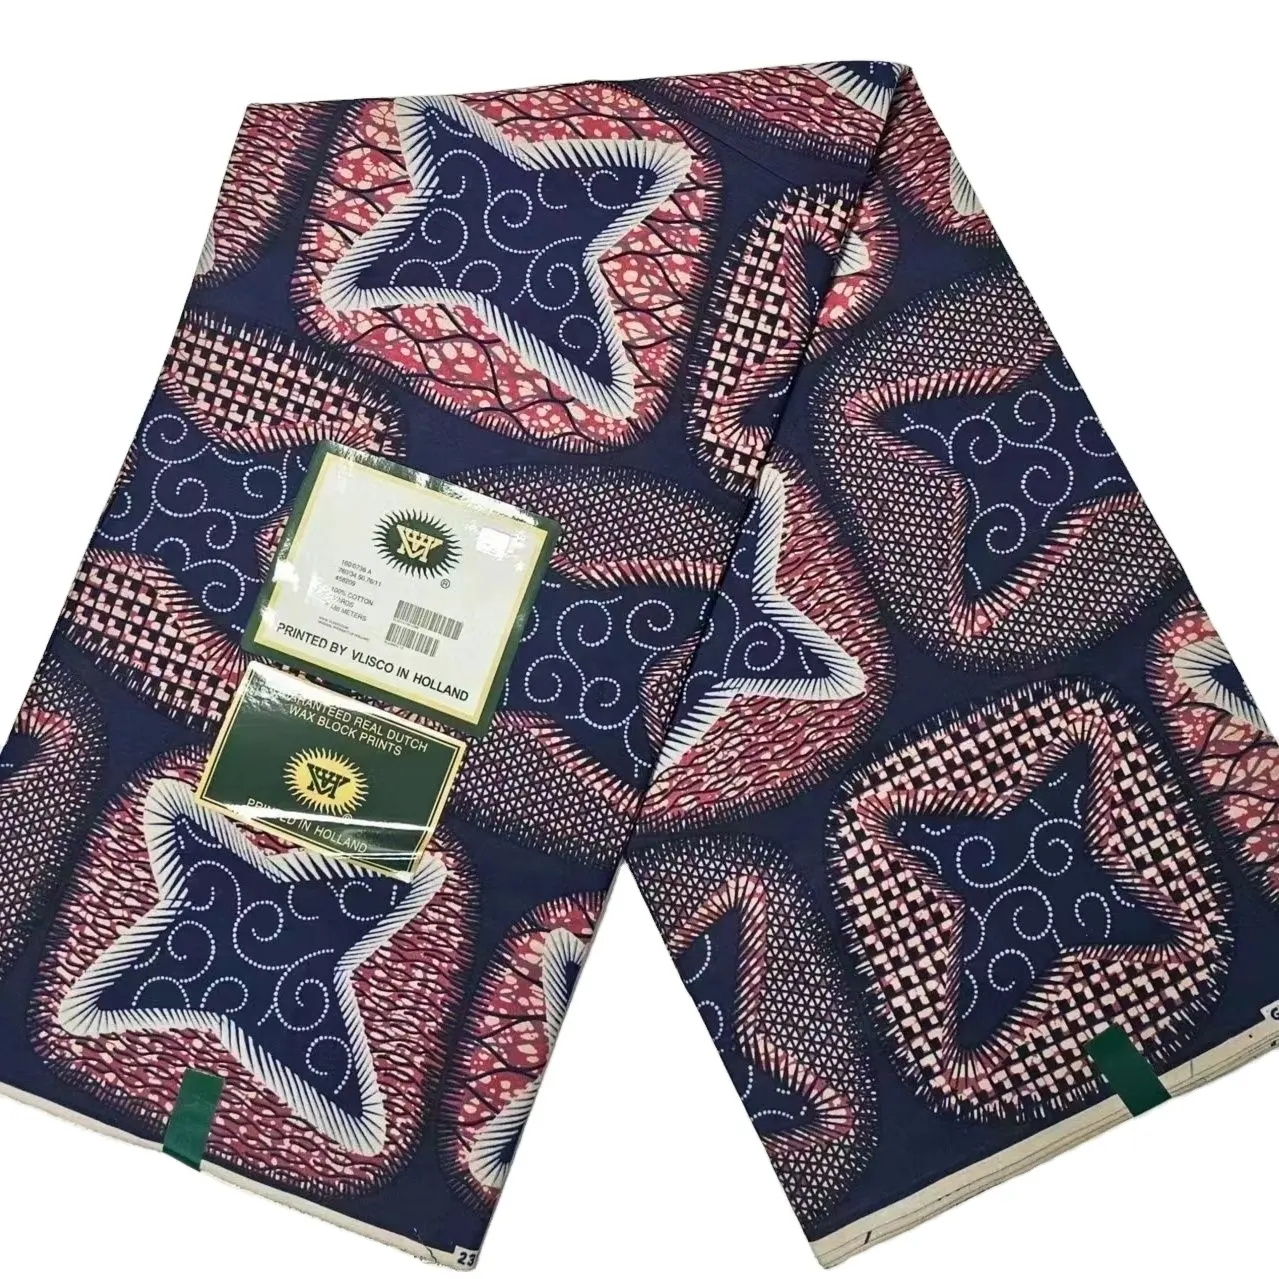 Tela de cera Africana estilo nacional tela de poliéster a través de impresión batik tela cera batik tela impresa DIY tela 6yadRS